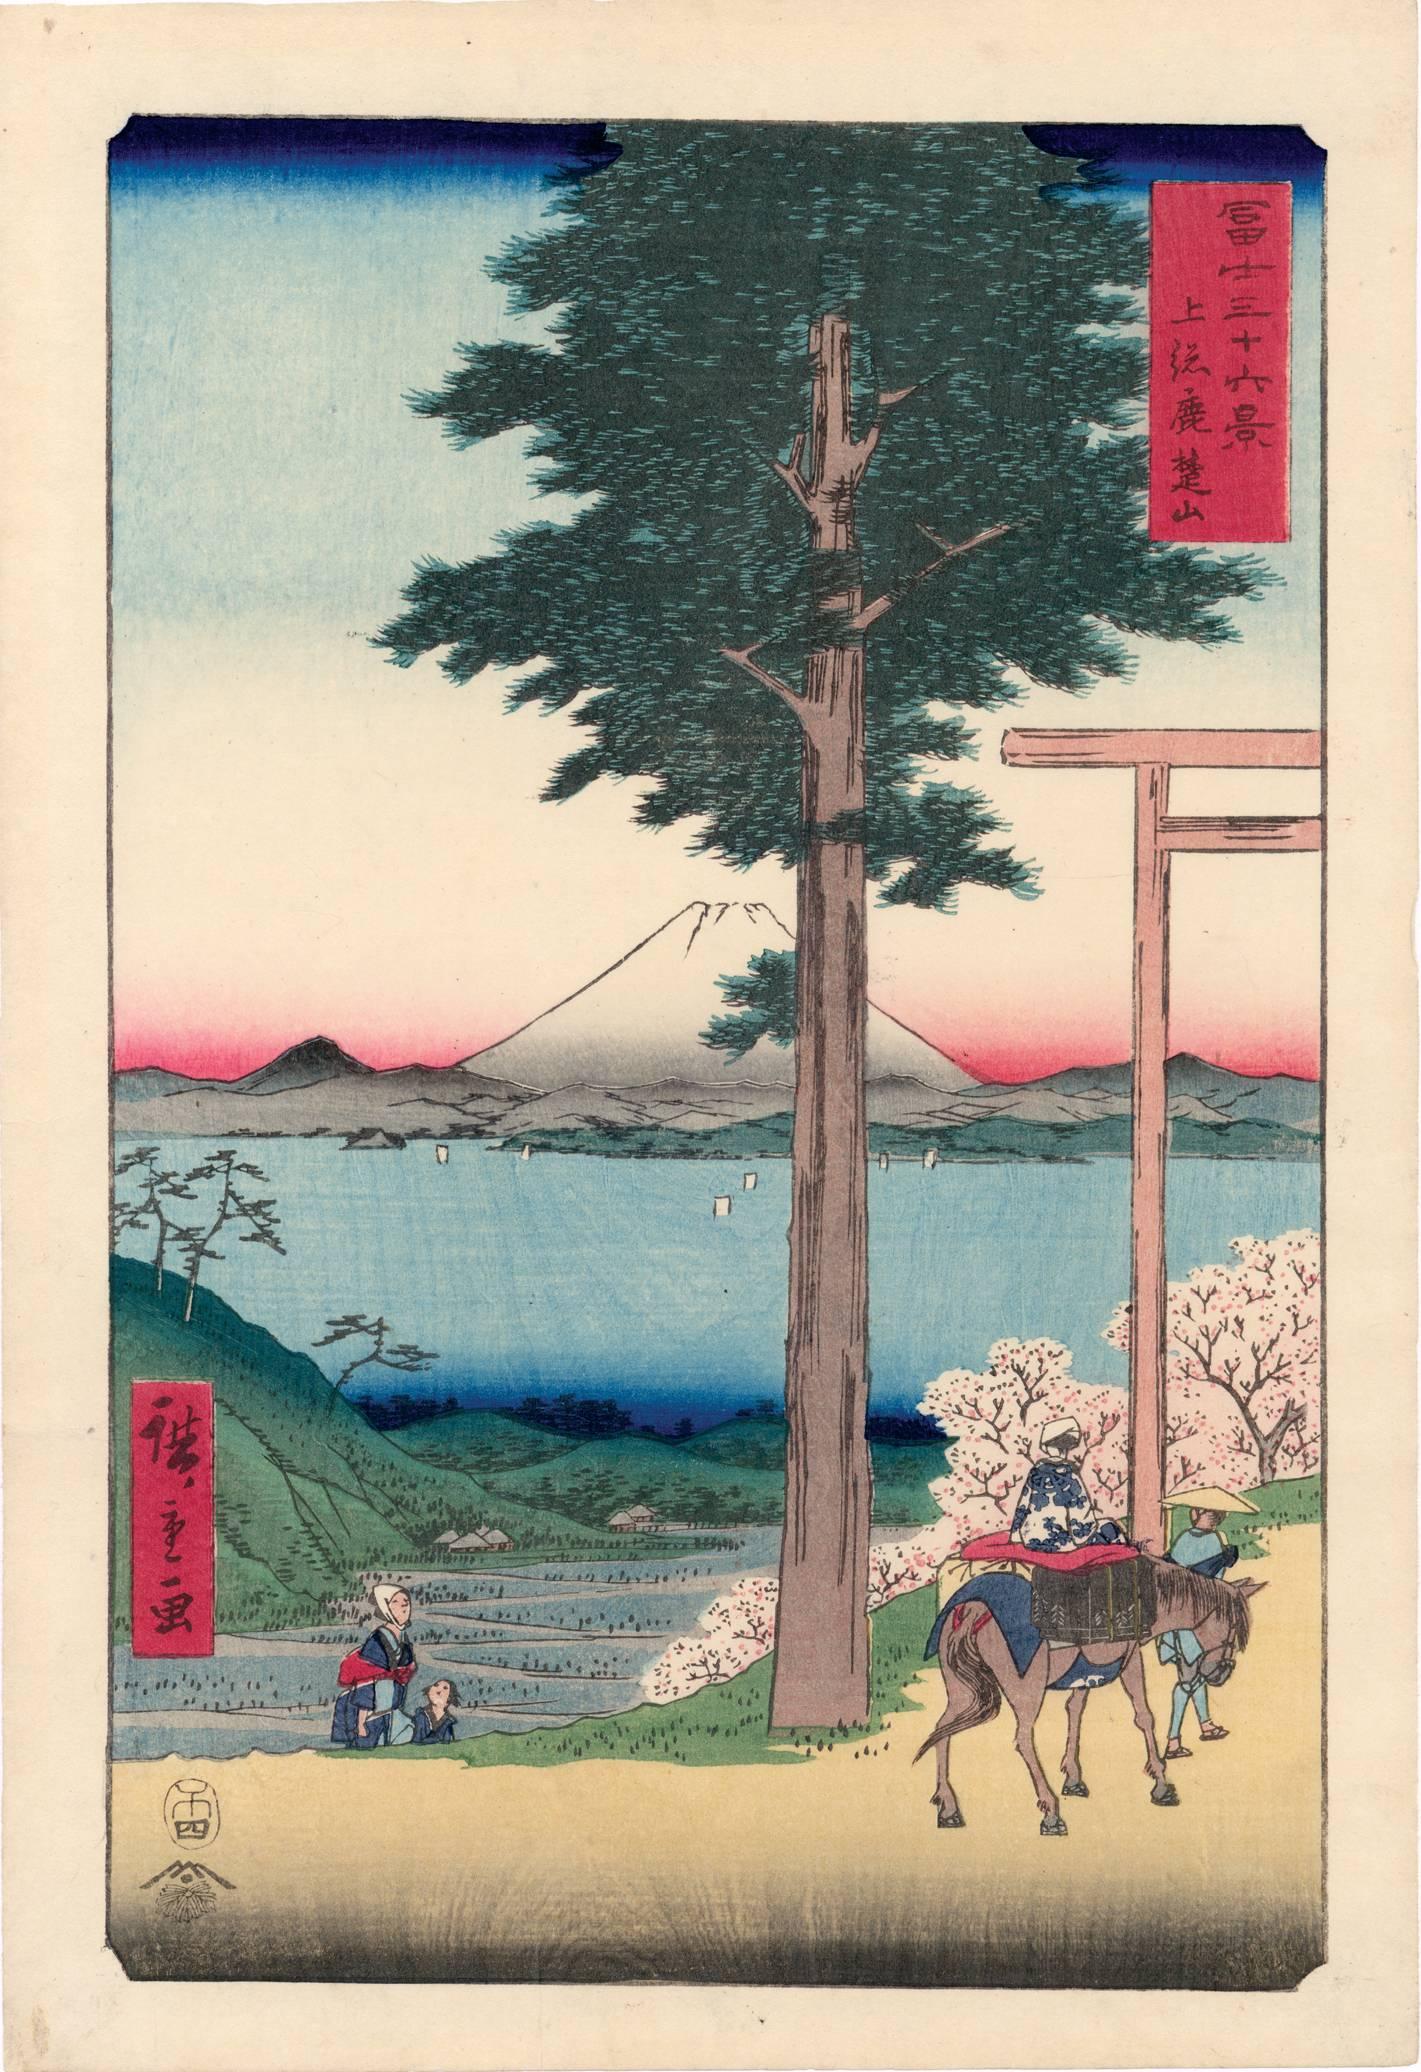 Utagawa Hiroshige (Ando Hiroshige) Landscape Print - View of Mount Fuji with Cherry Blossoms